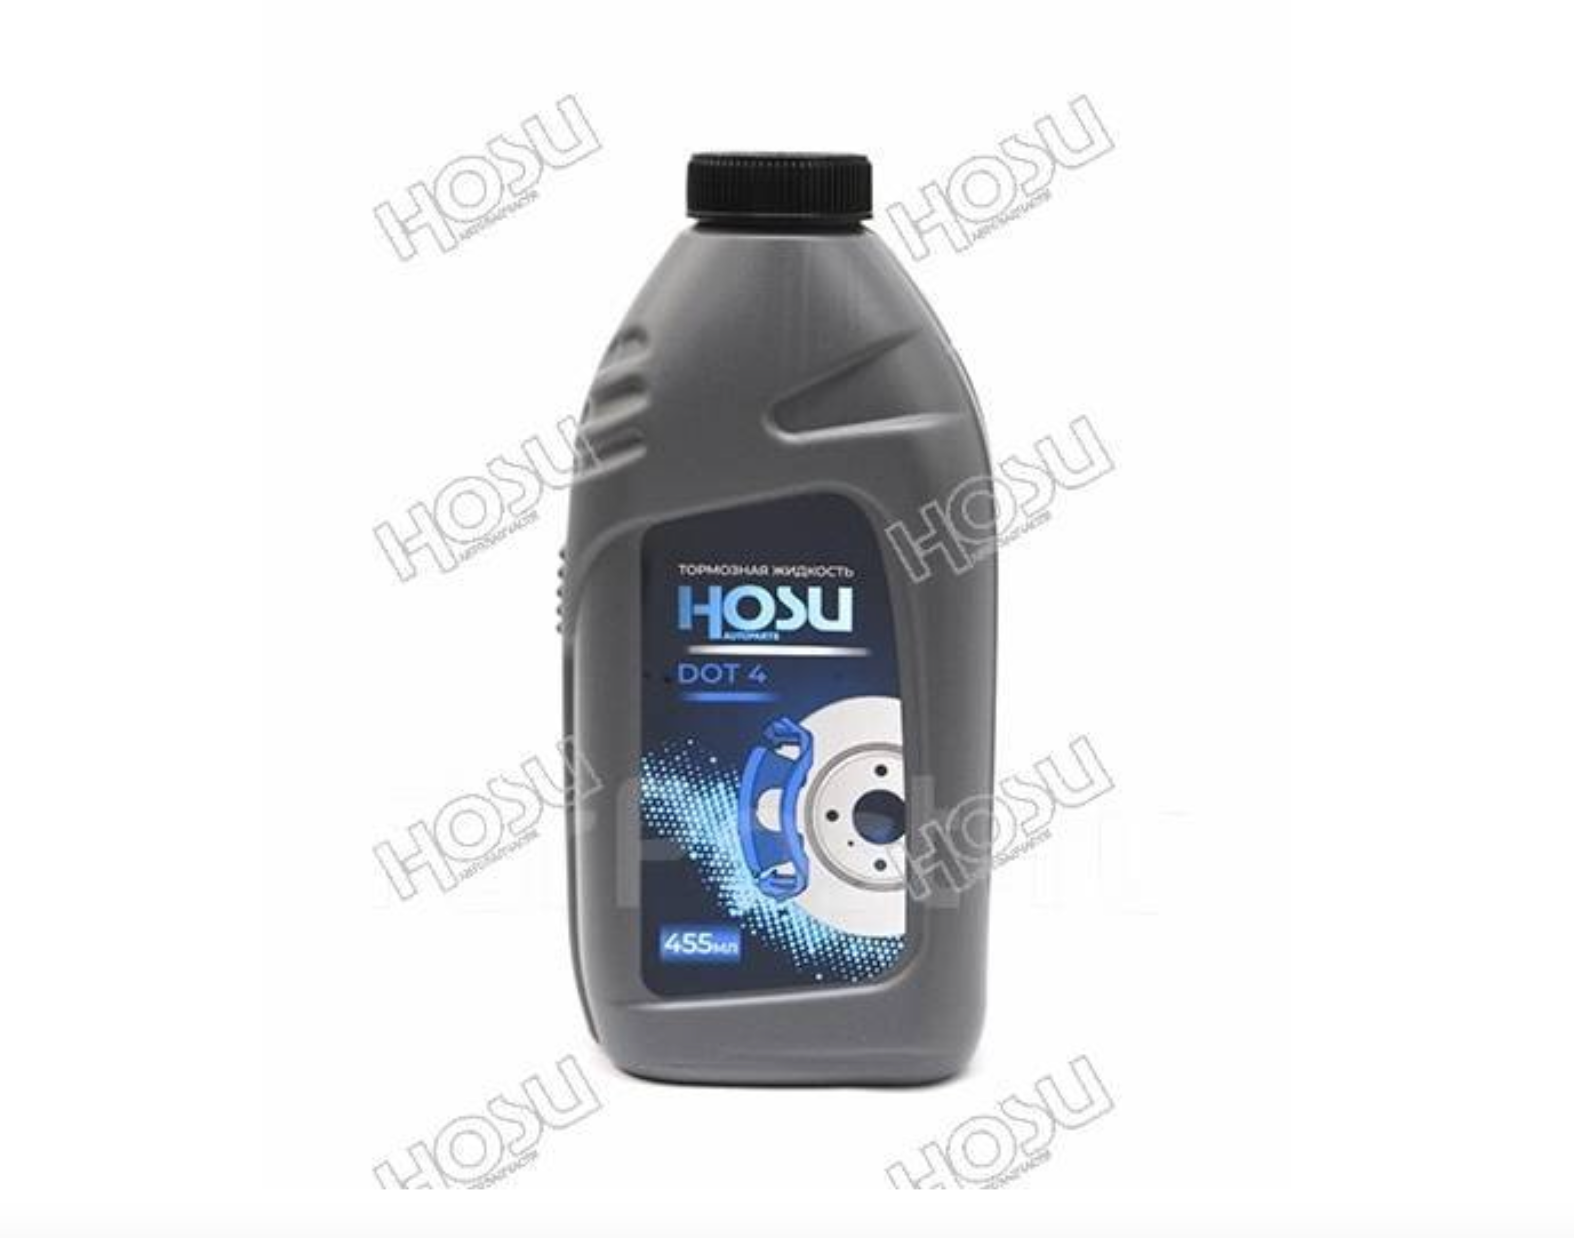 Жидкость Тормозная Hosu Dot4 455мл HOSU арт. HSBF0001